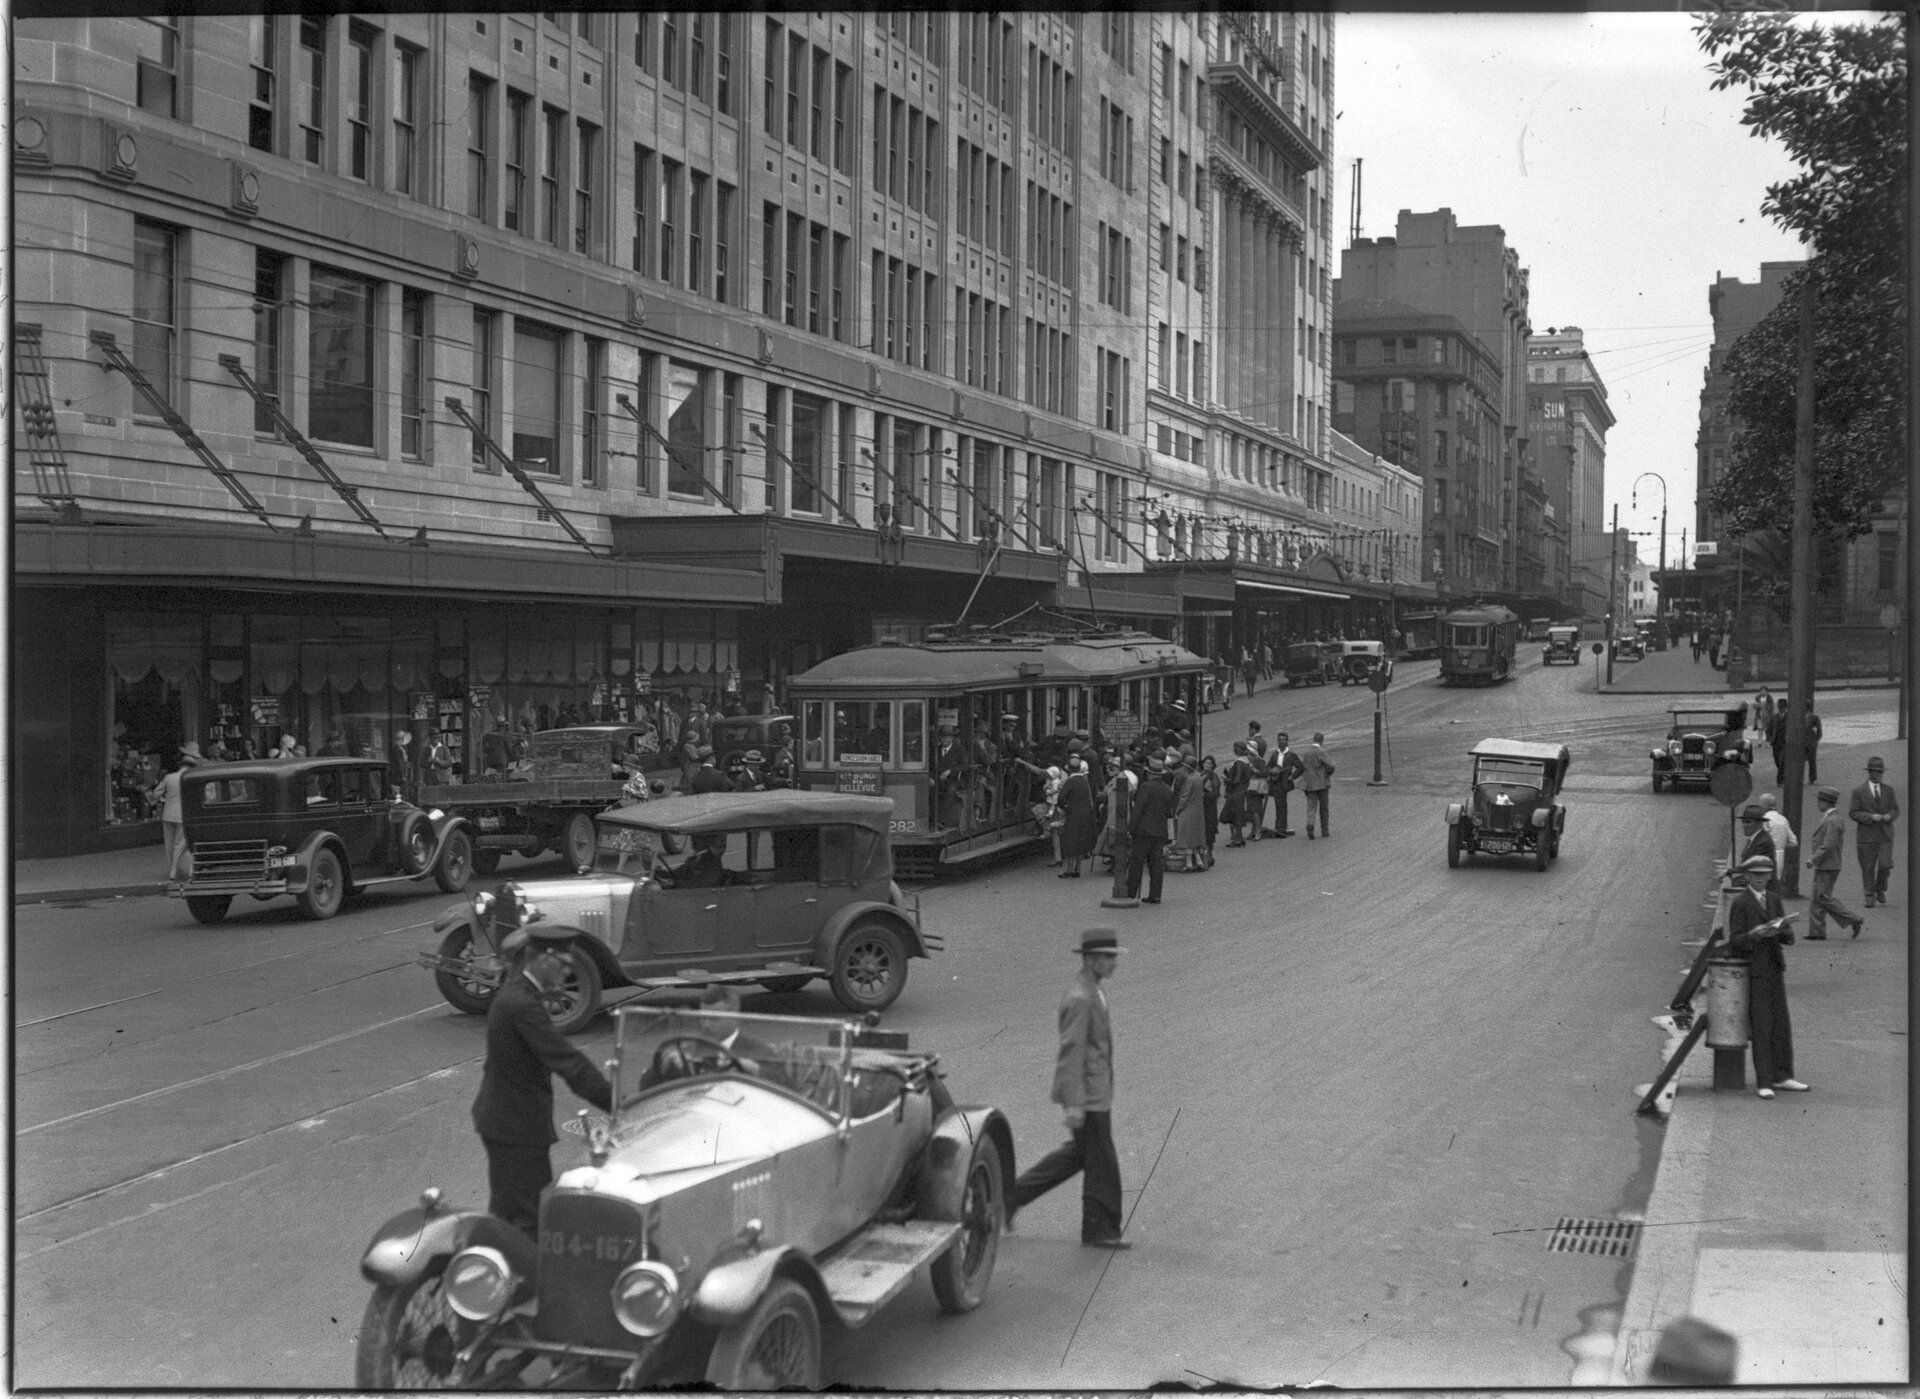 Elizabeth Street, Sydney in 1931 showing cars, shops and trams